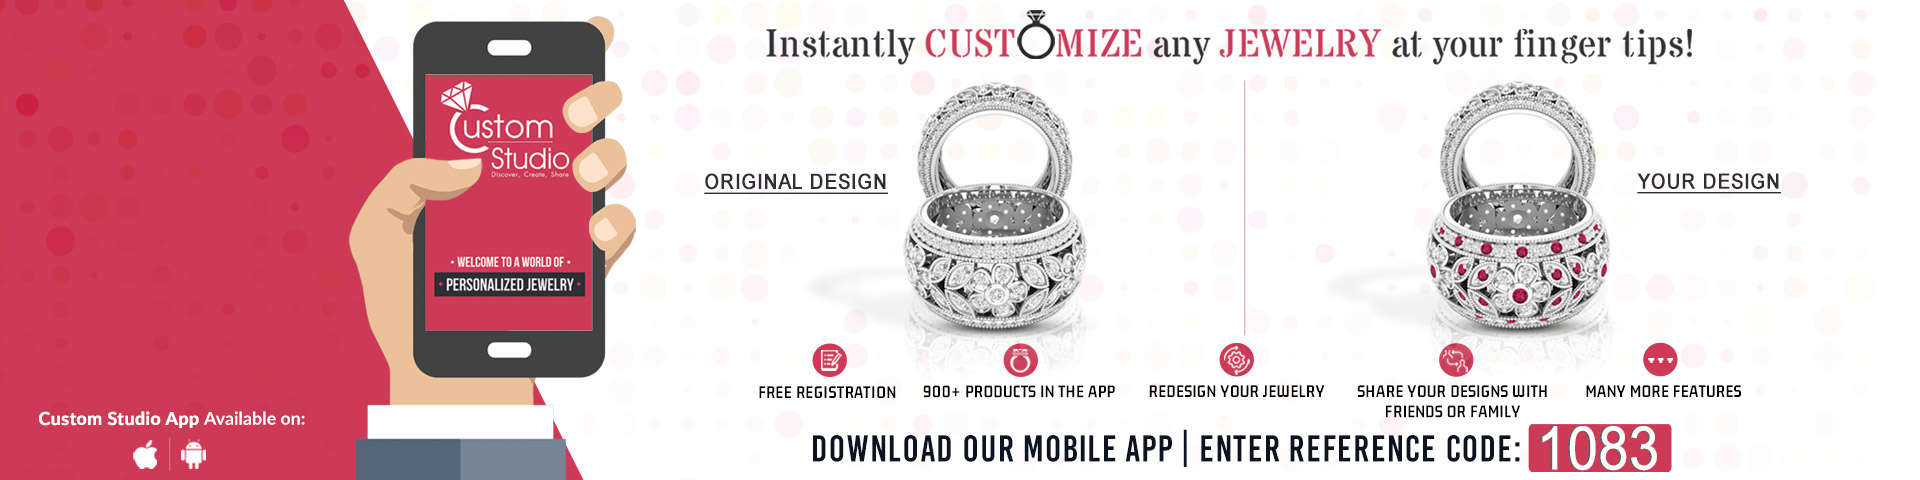 Custom Jewelry Design at King's with Custom Studio